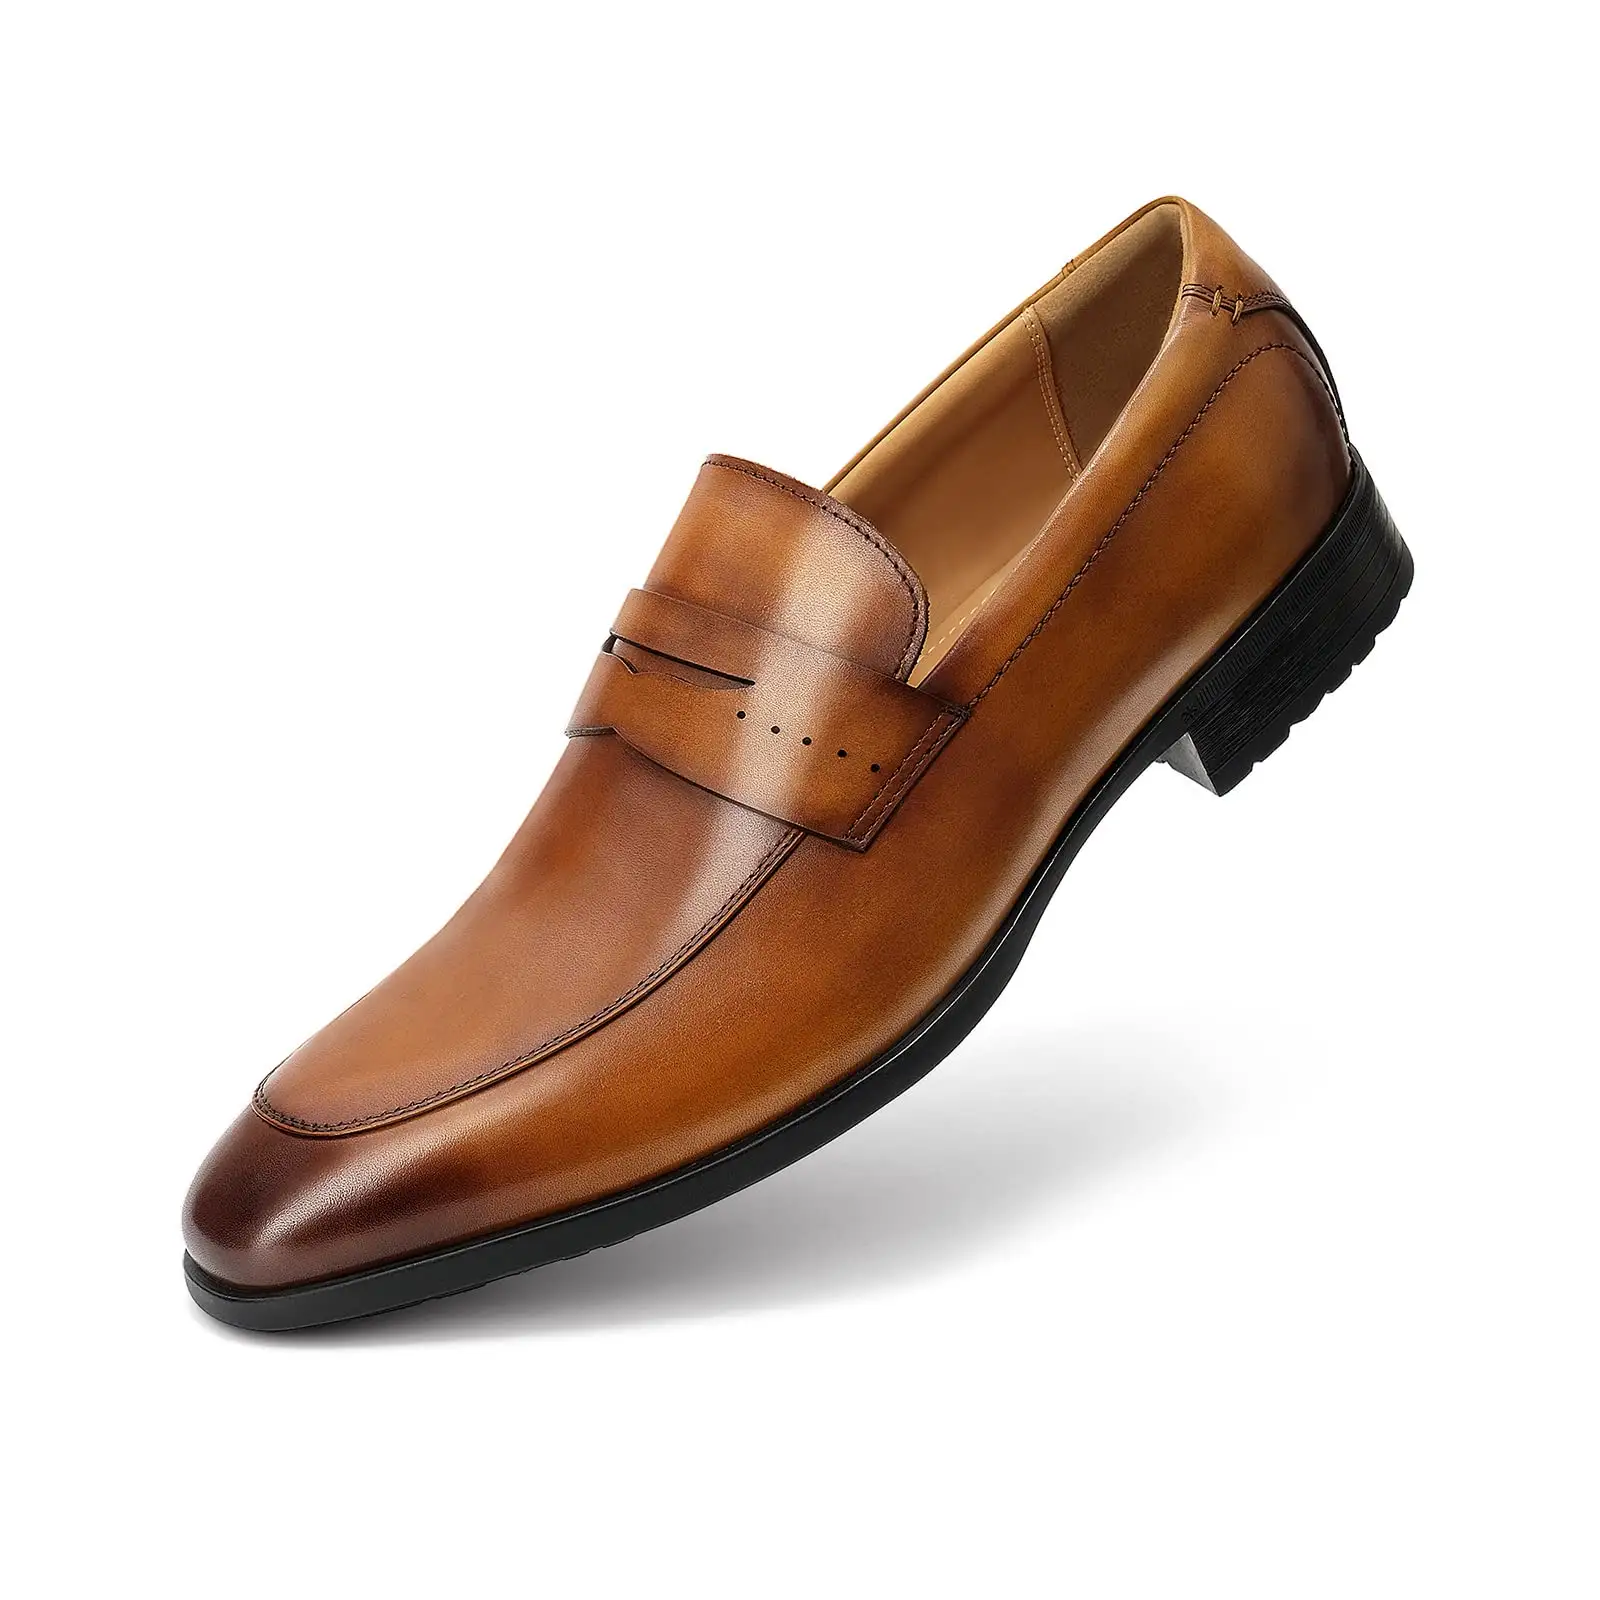 AMPLE Luxury Formal Shoe Slip On Penny Loafer Black Genuine Leather Loafers Dress Shoes For Men